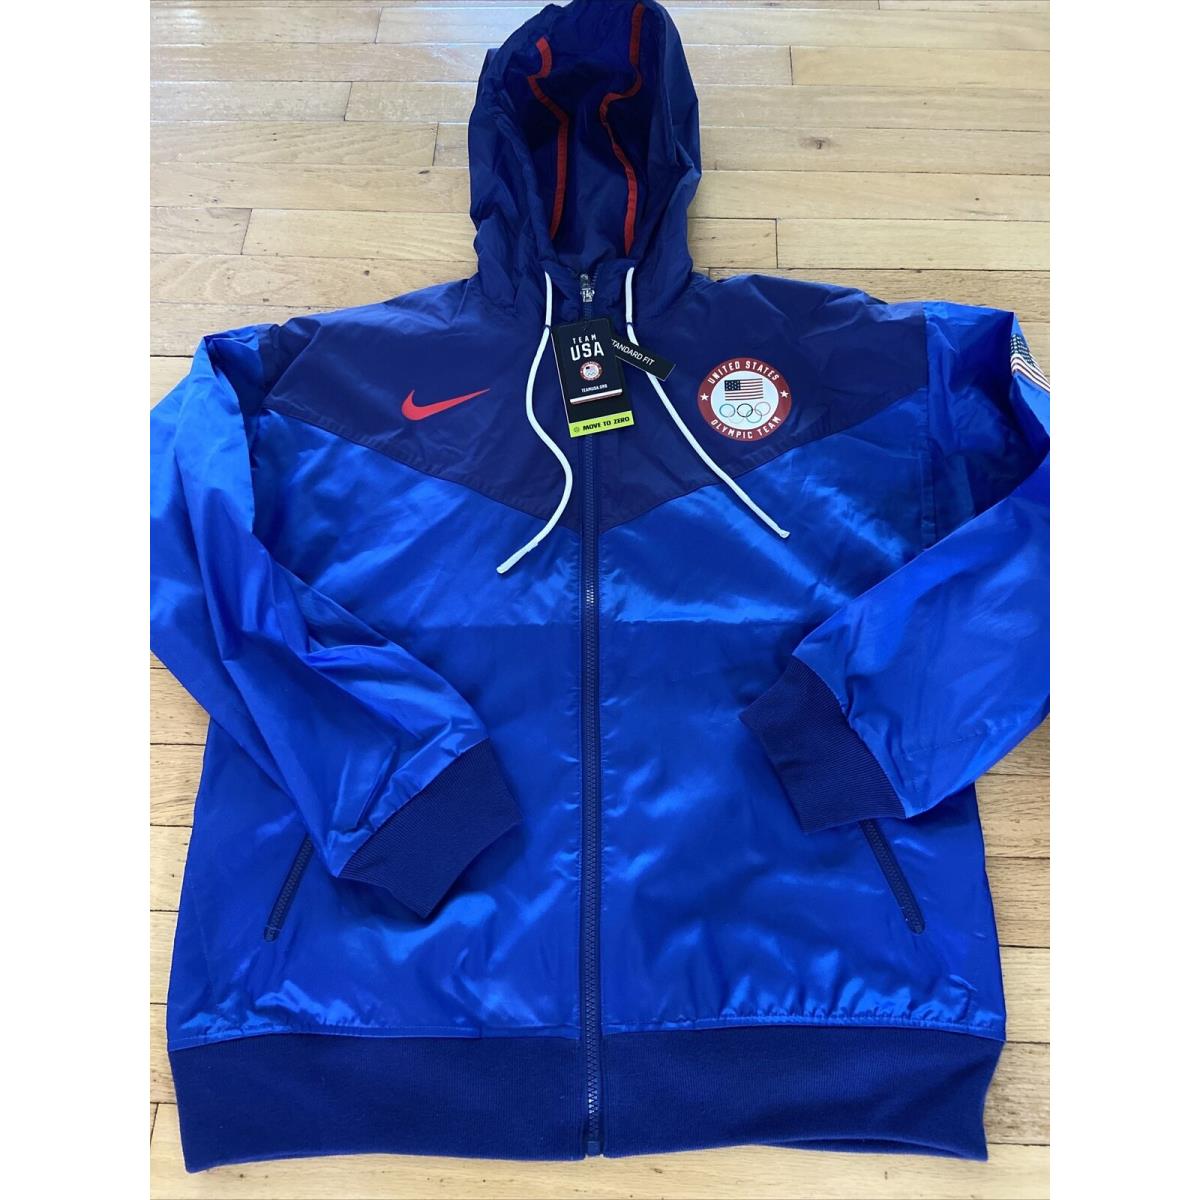 Nike Sportswear Team Usa Windrunner Blue Olympic Jacket CK5813-455 Size M Men s